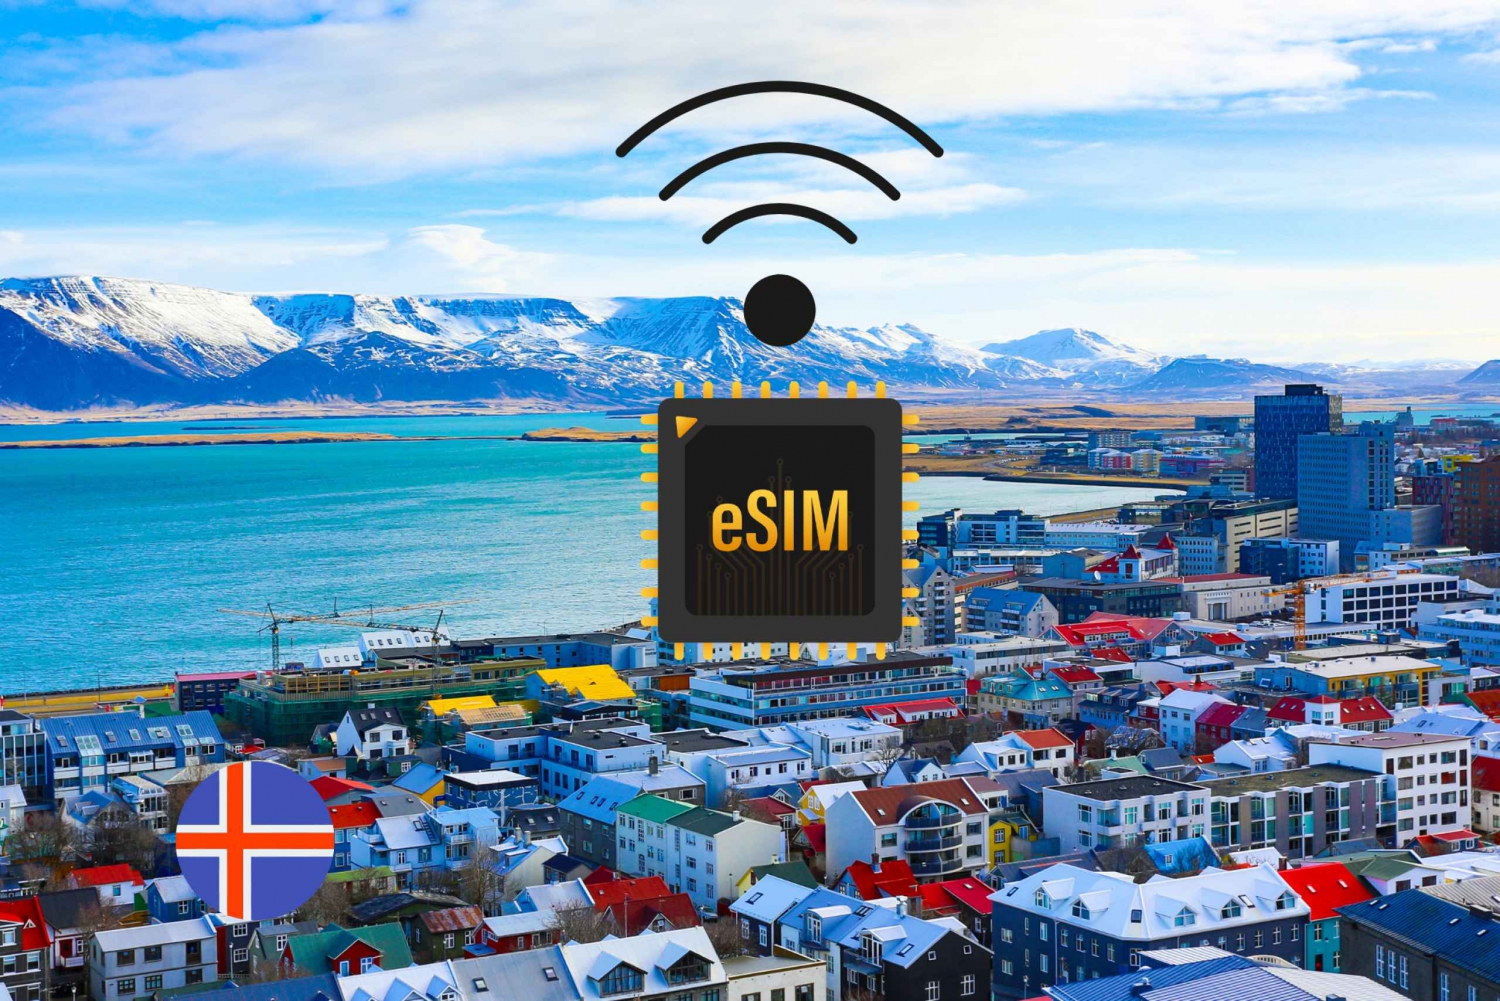 eSIM Islandia : Plan de datos Internet 4G/5G